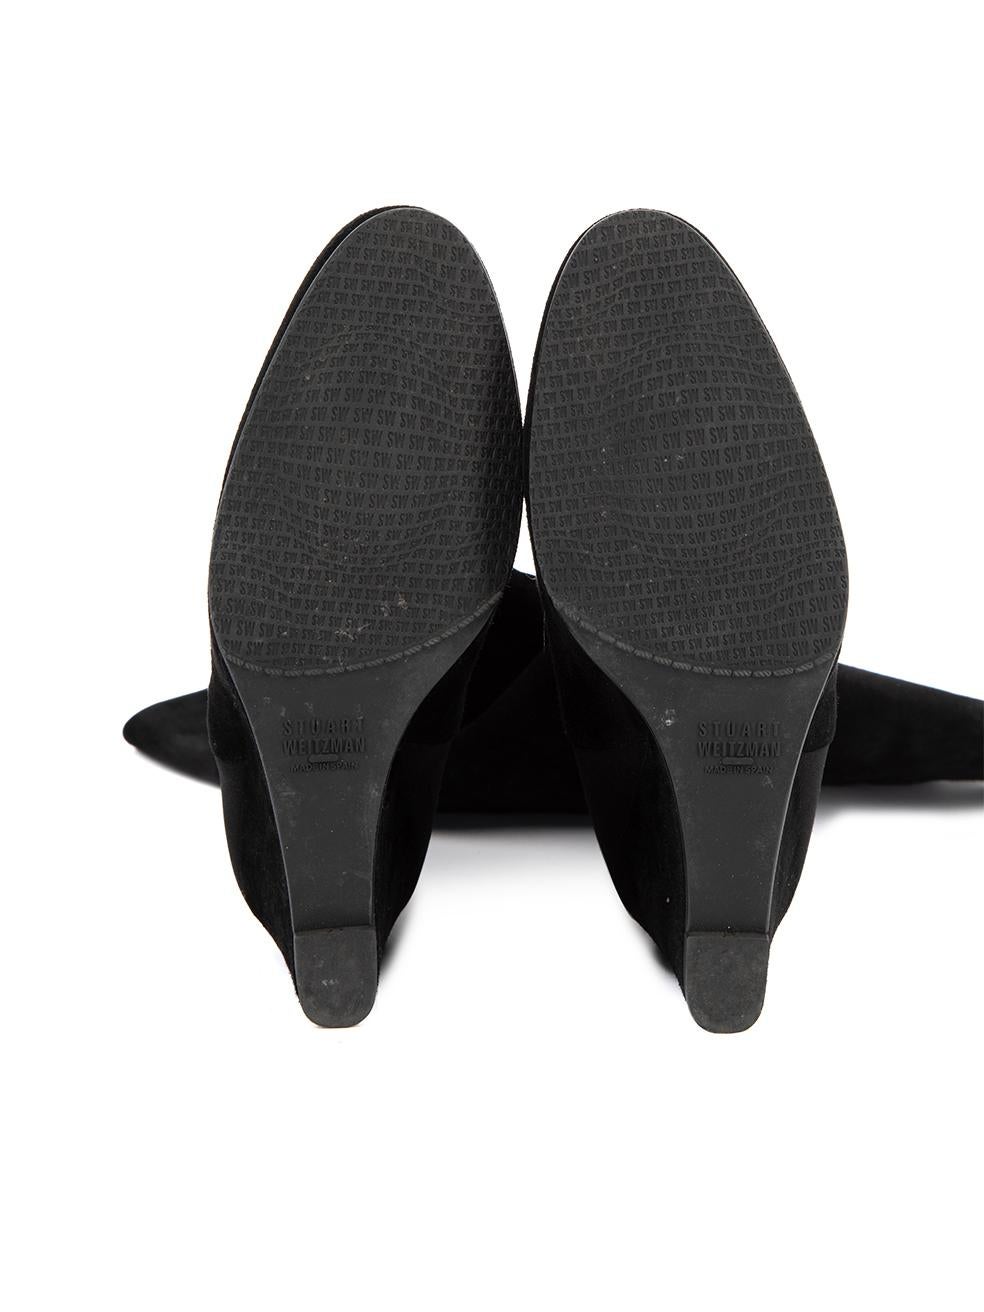 Women's Stuart Weitzman x Russell Bromley Black Suede Wedge Knee Boots Size US 8.5